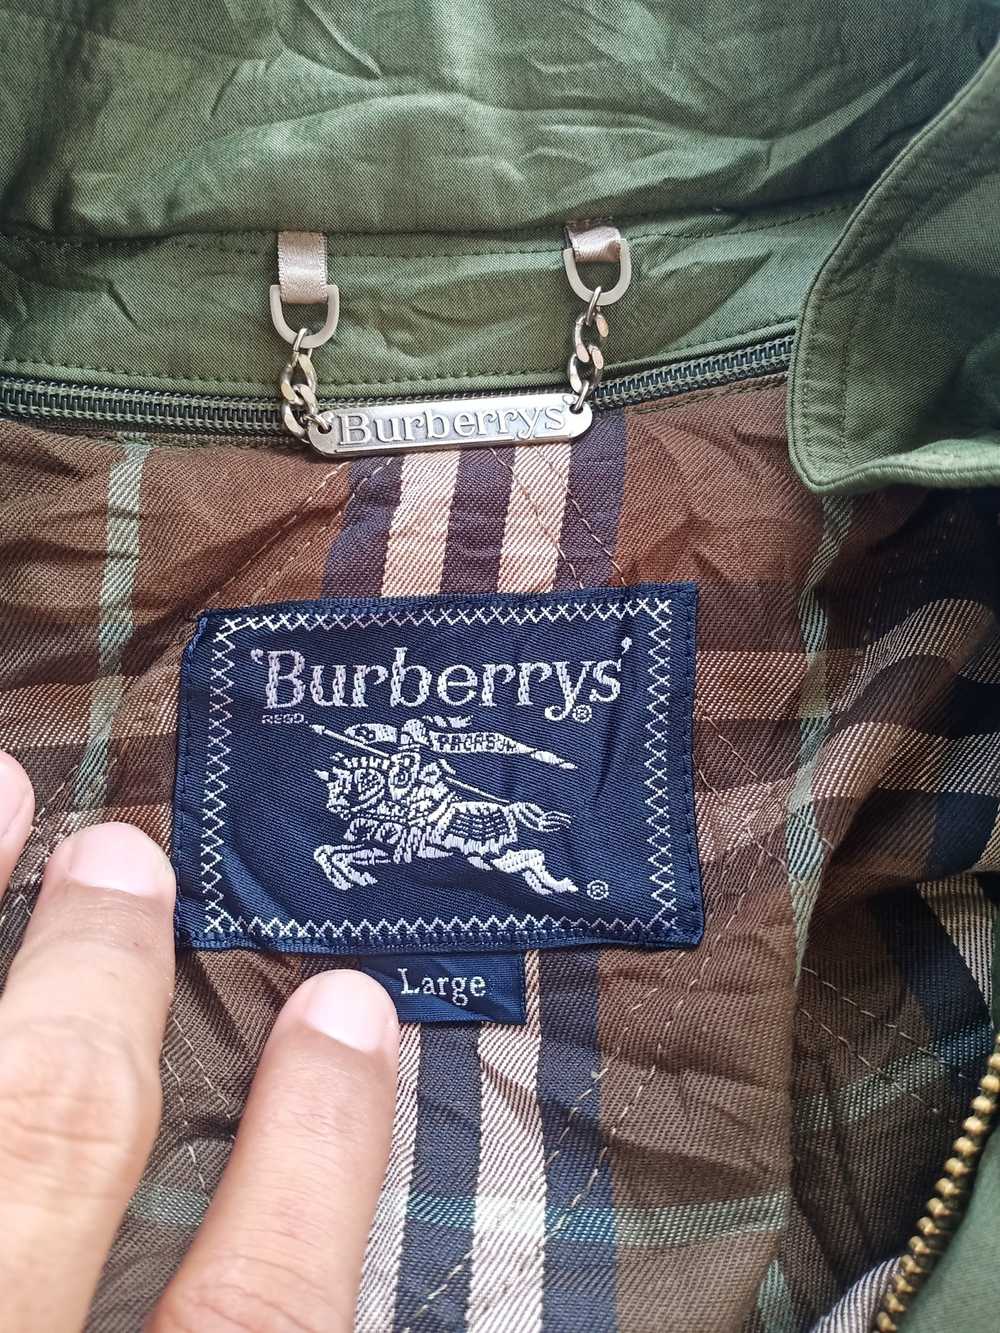 Burberry Burberrys Parka Jacket - image 6